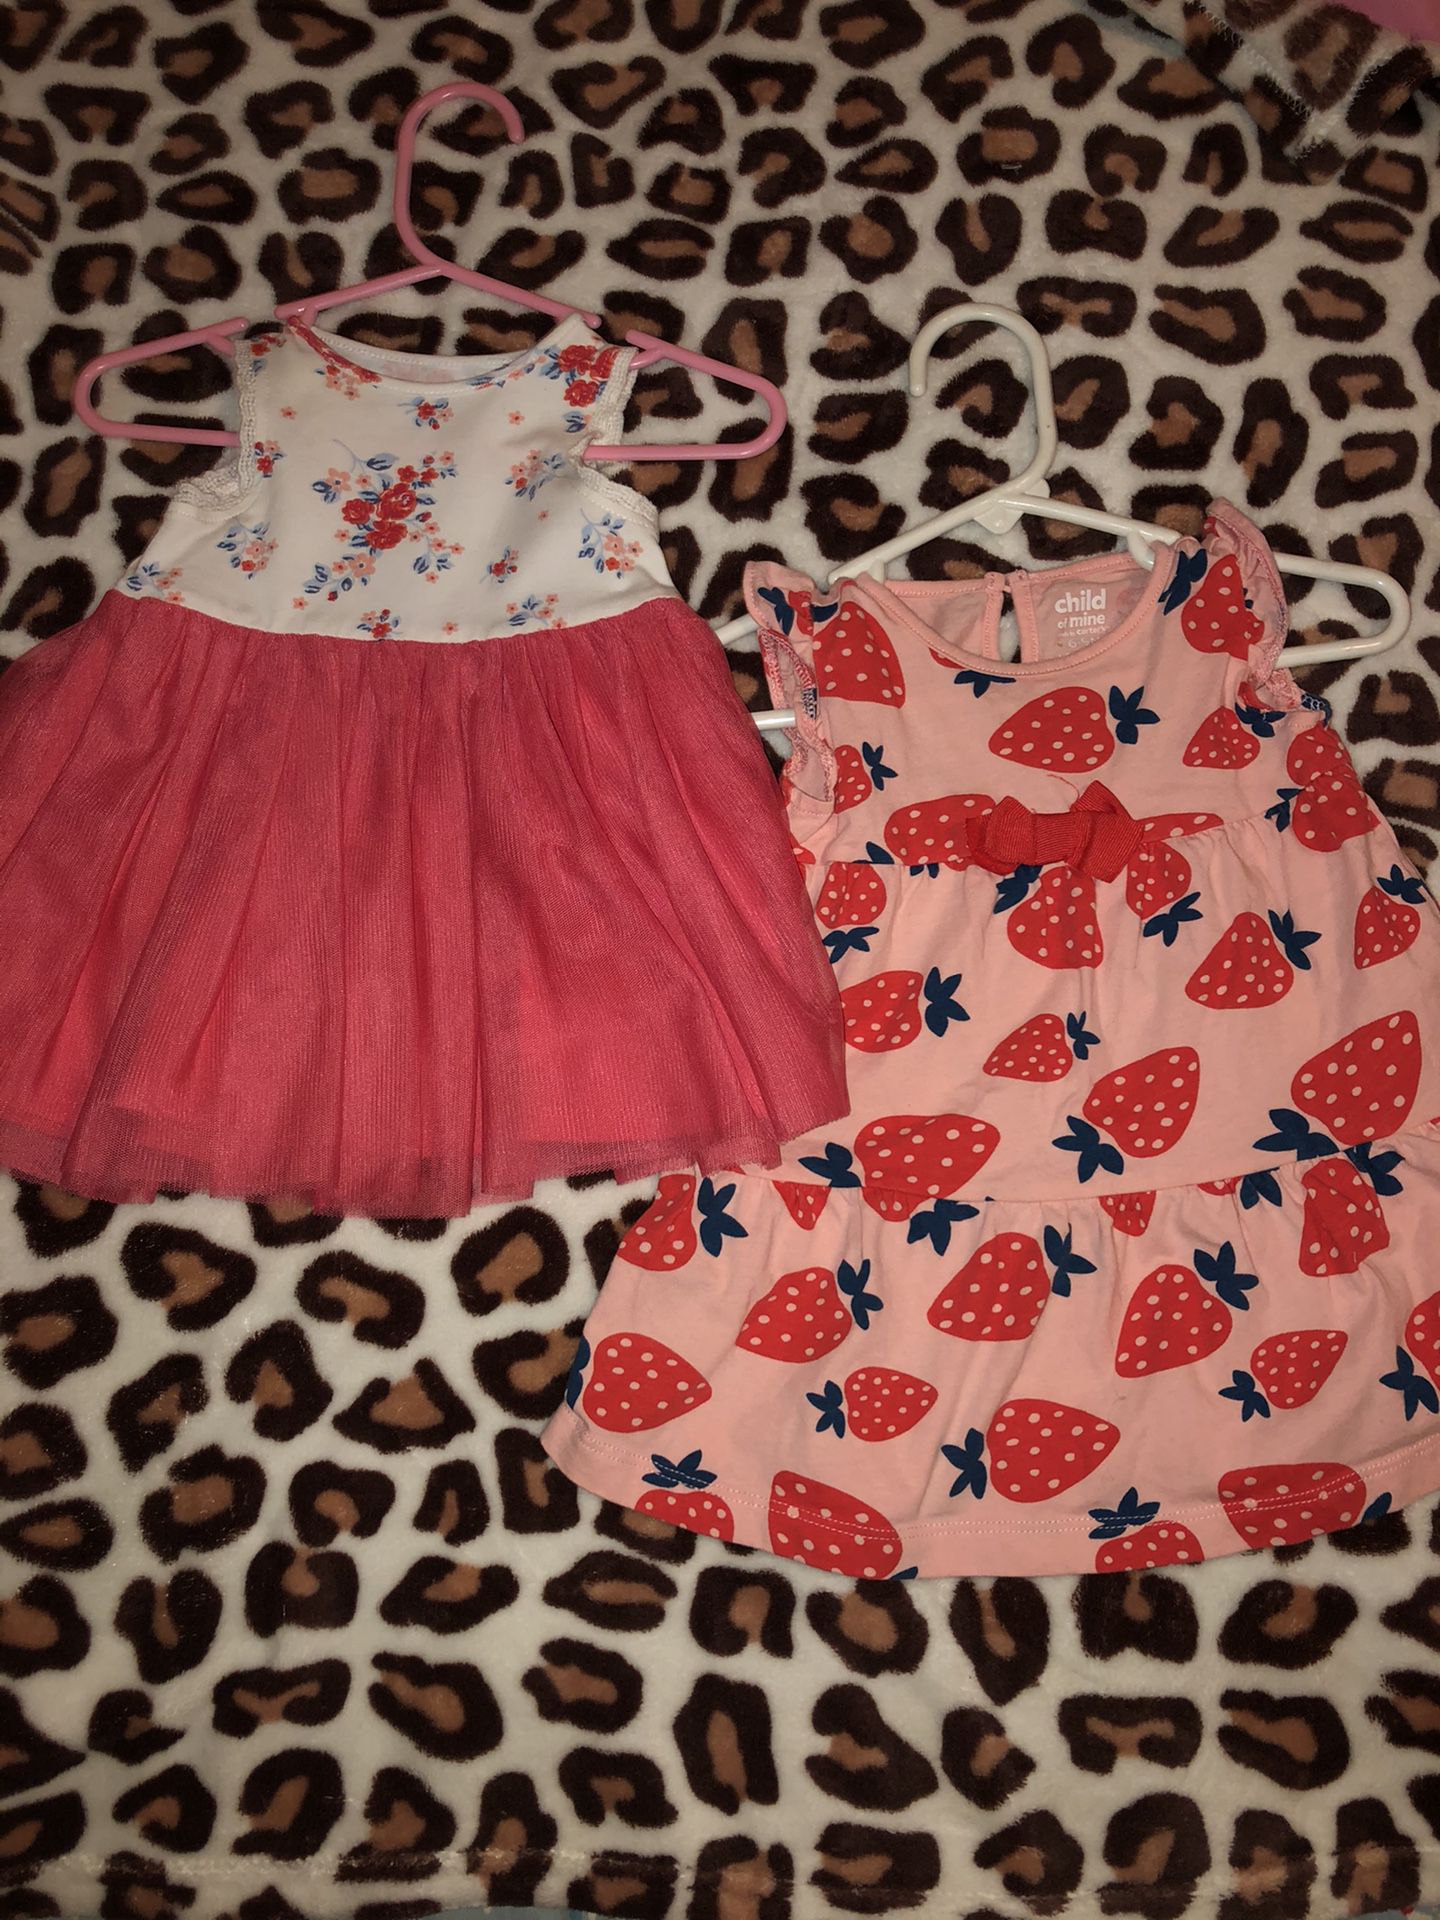 Cute pink babygirl dresses